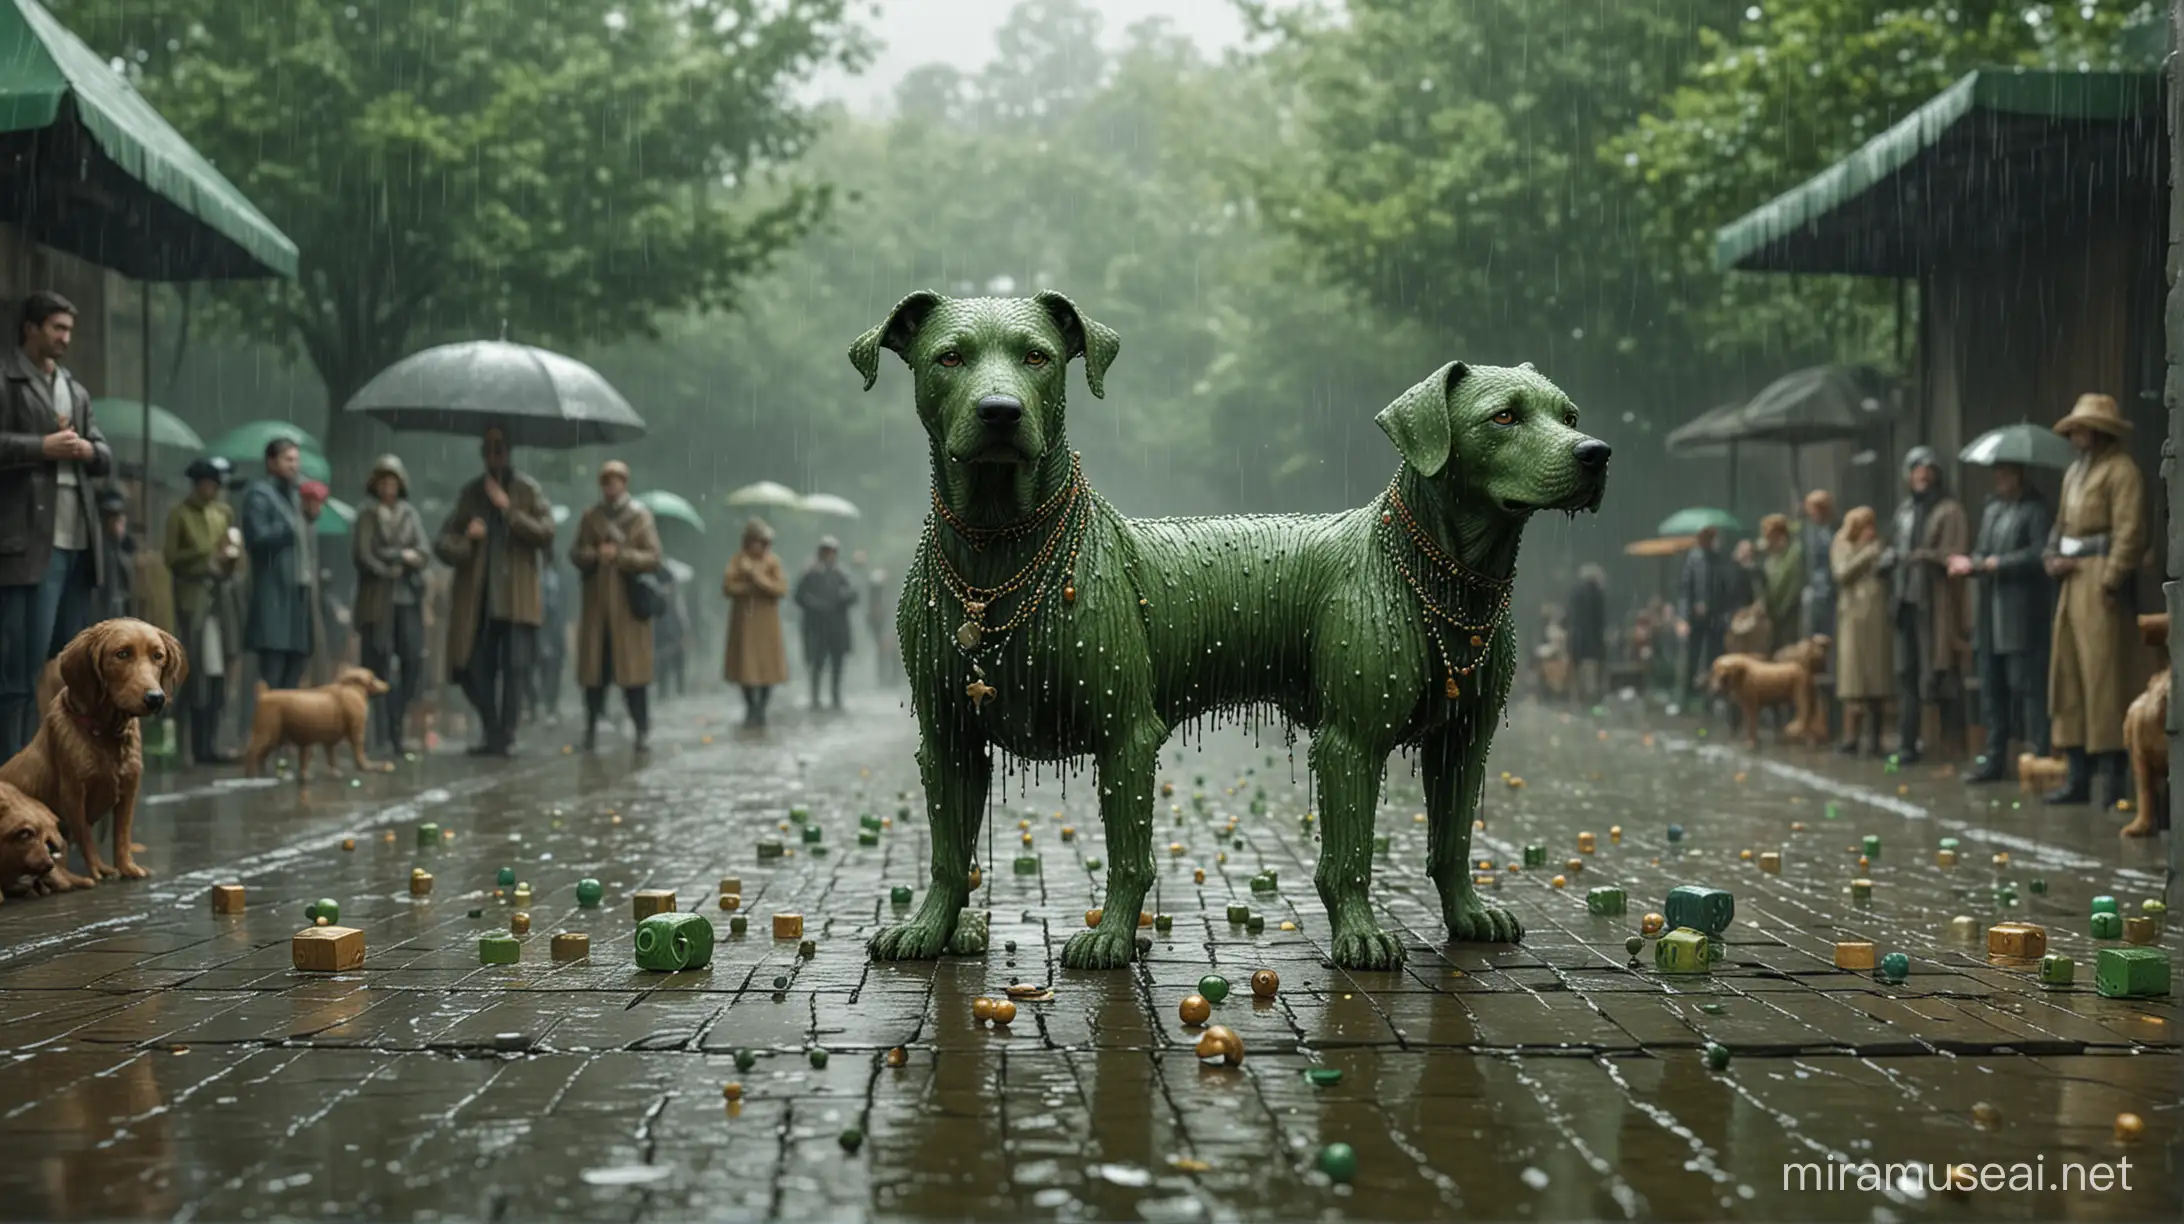 Anthropomorphic Square Dogs in Rainy Green Arena